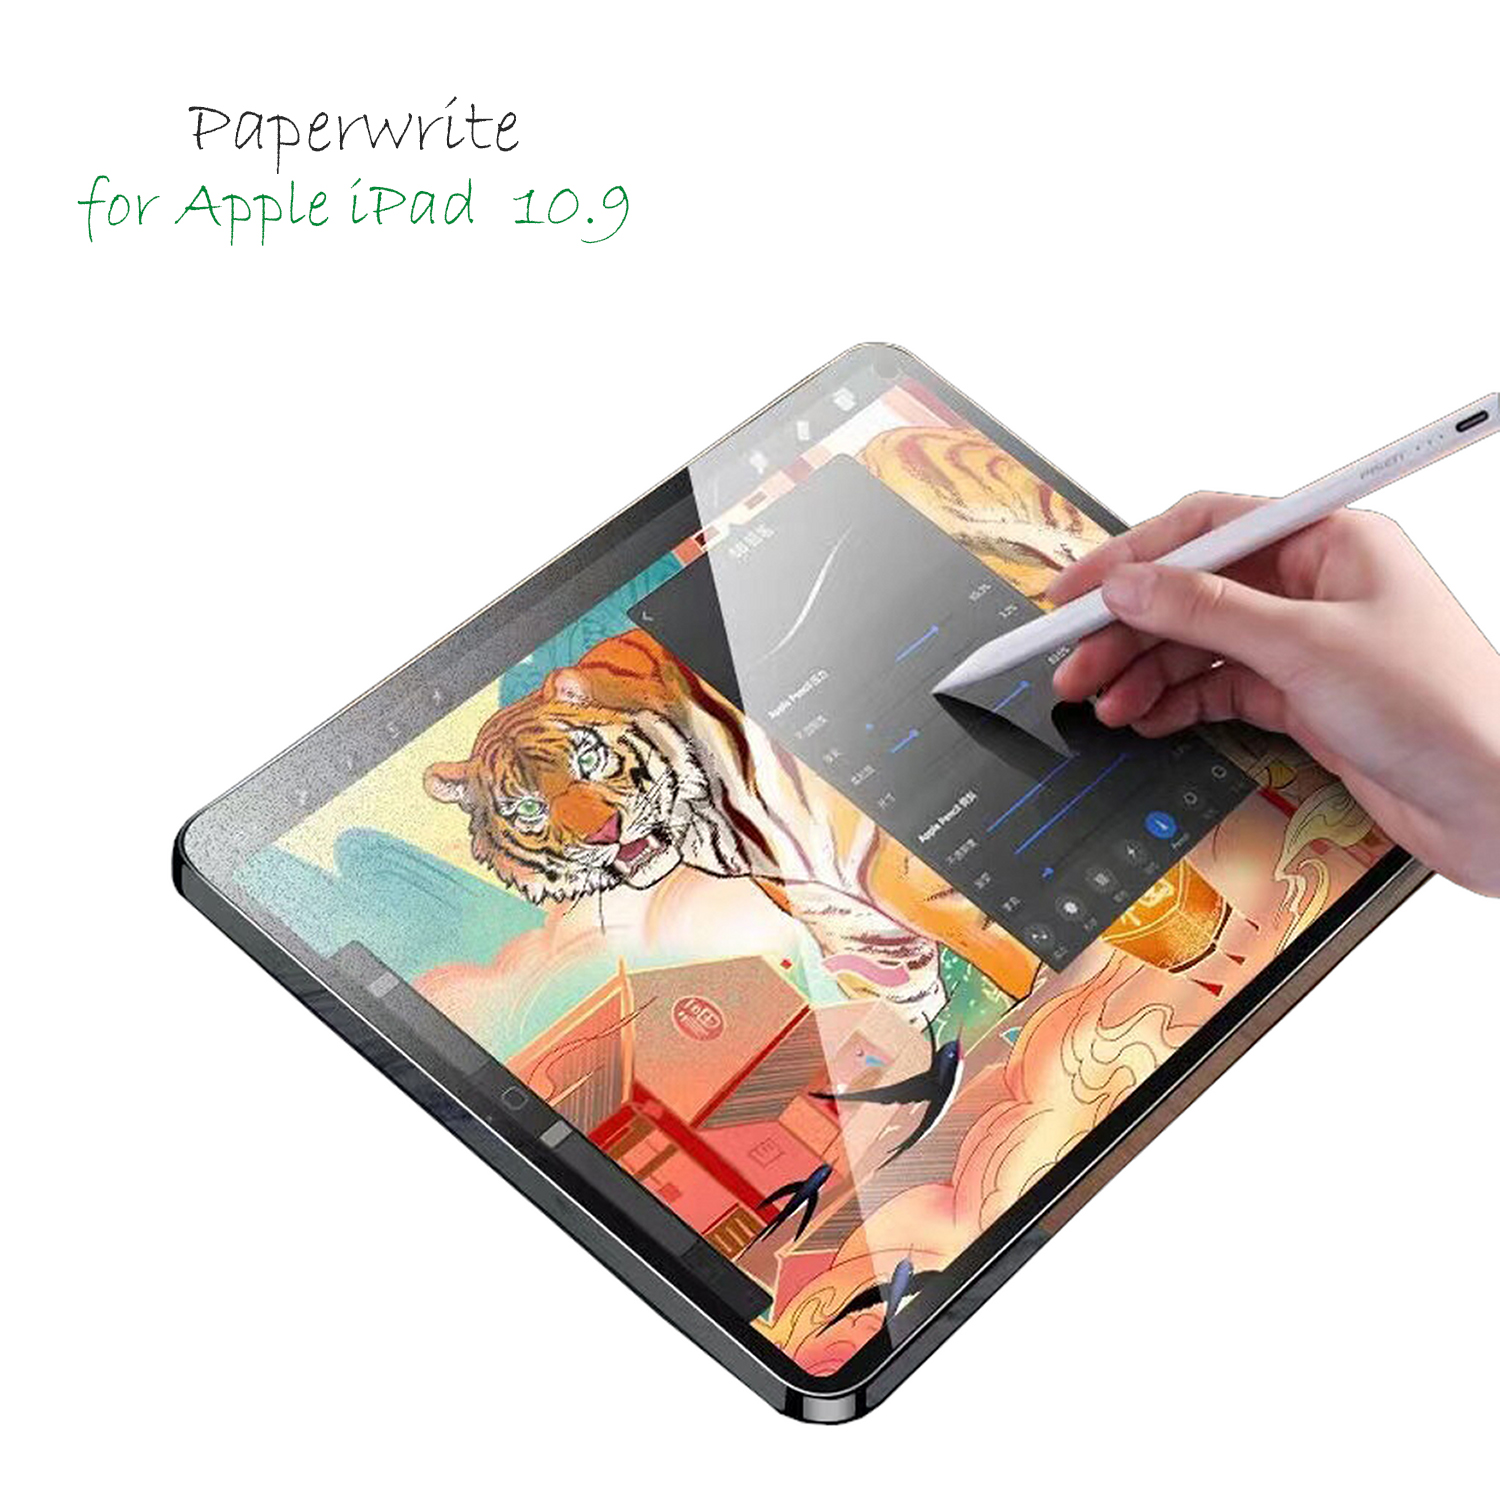 The 4smarts anti glare iPad screen protector matte ensures that no fingerprints are visible.